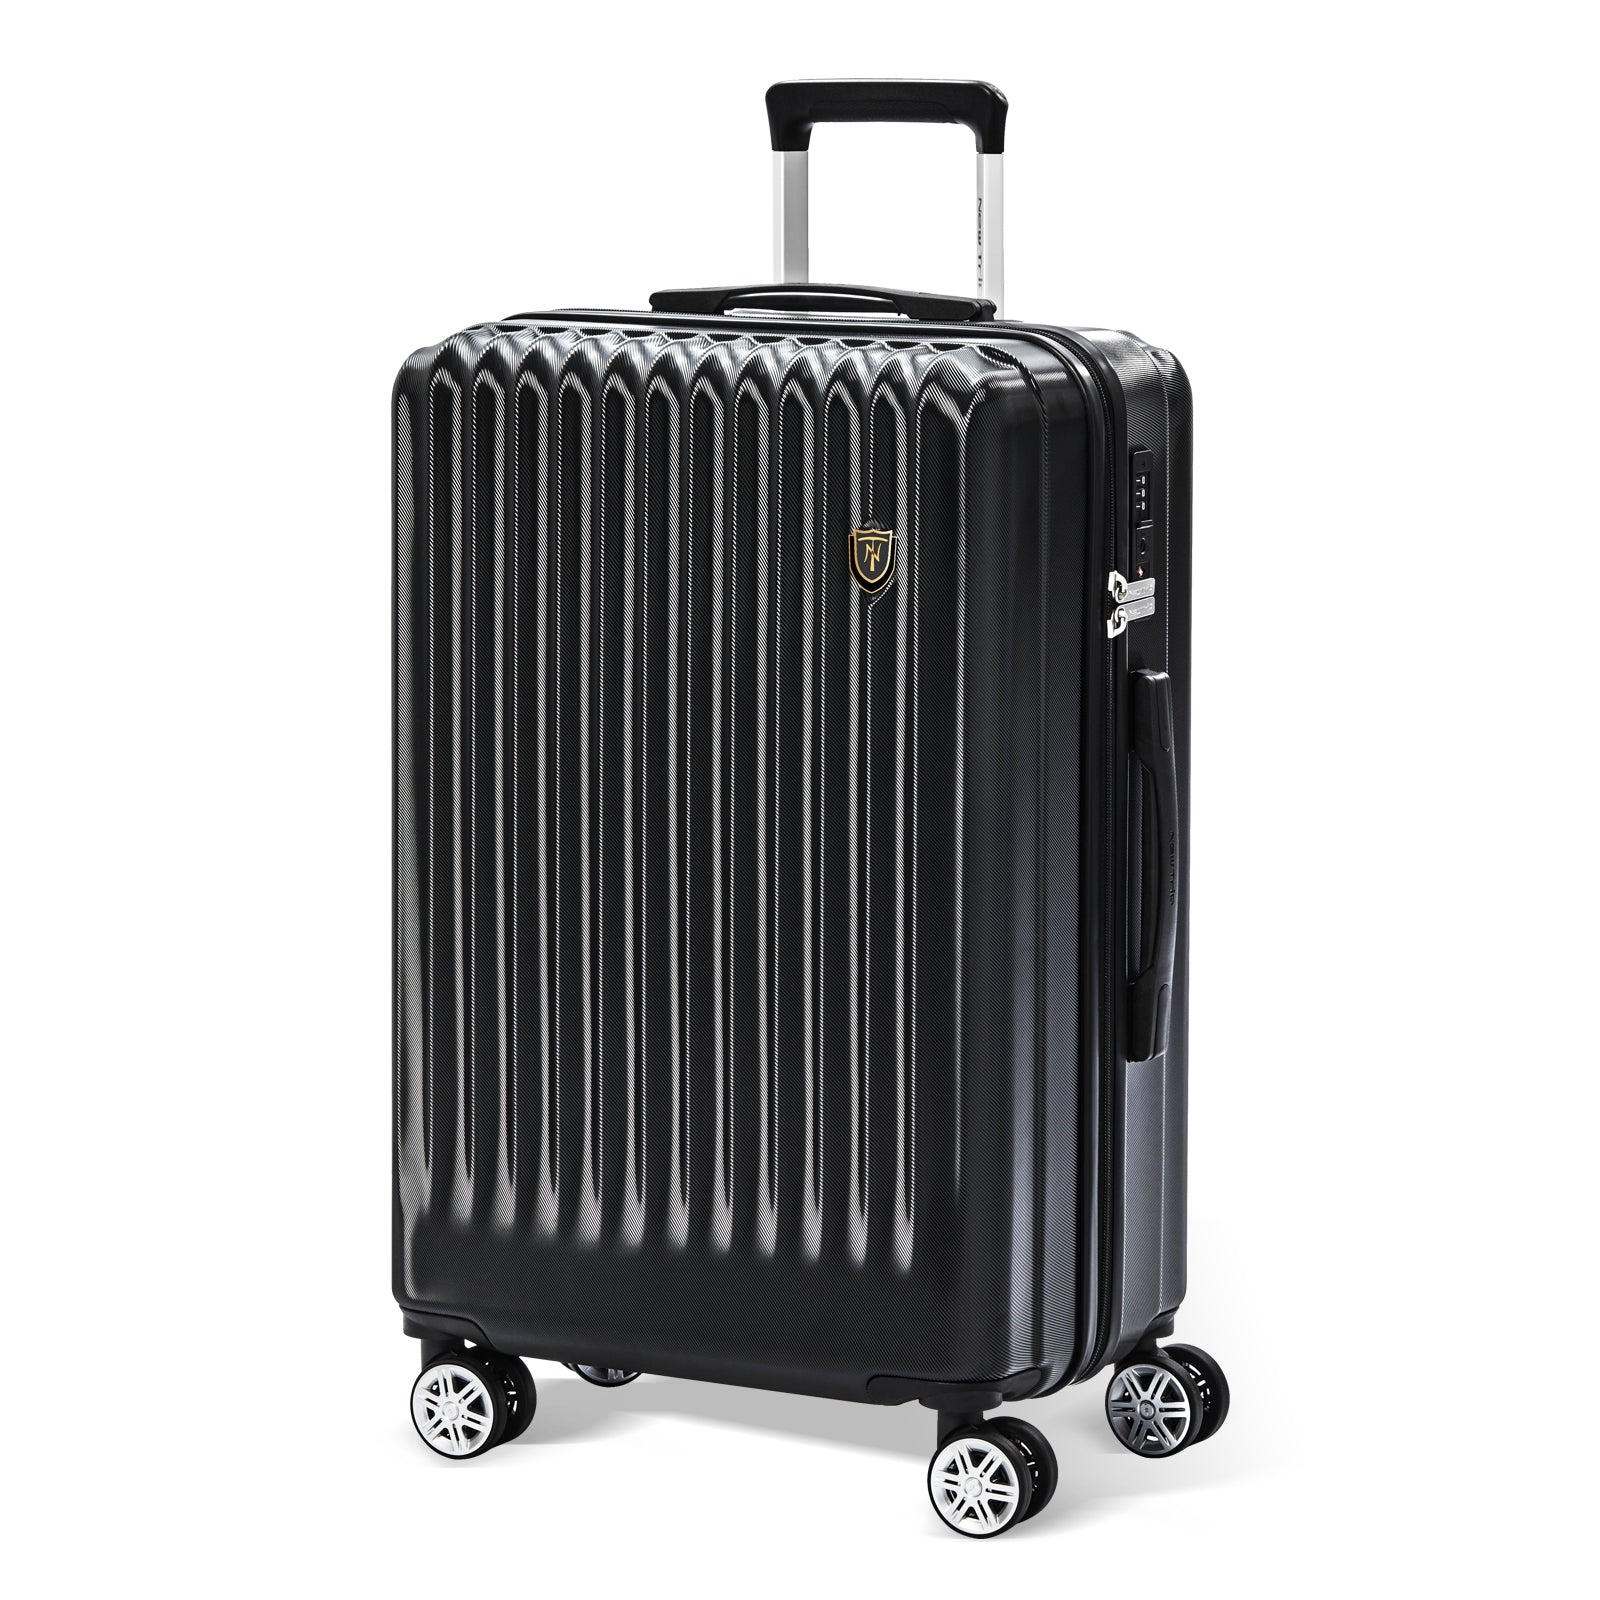 New Trip] スーツケース ブラック S~Lサイズ 40~100L